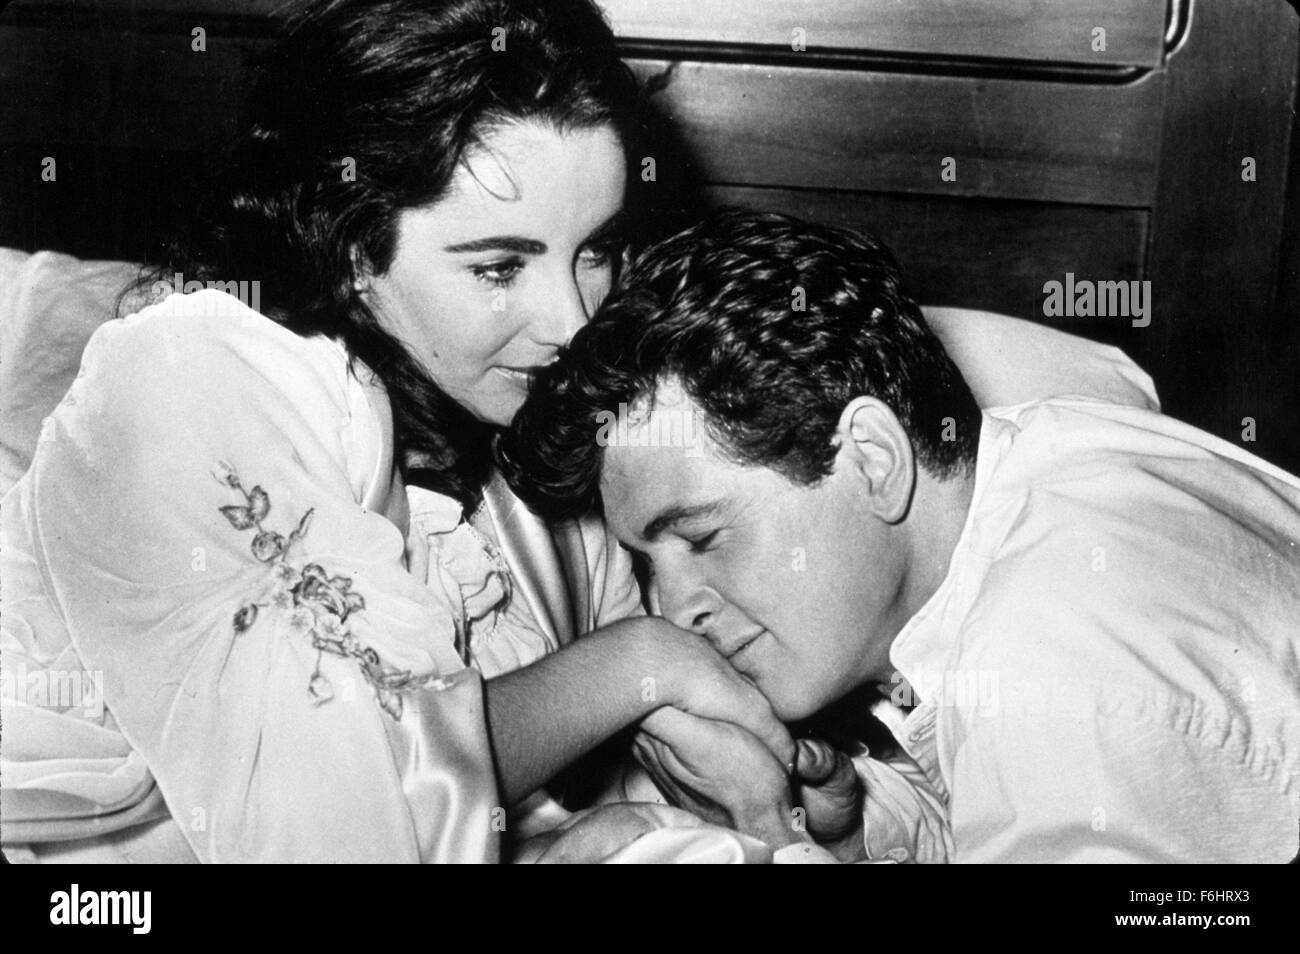 1955, Film Title: GIANT, Director: GEORGE STEVENS, Studio: WARNER, Pictured: ROCK HUDSON, ELIZABETH TAYLOR, BED (IN/ON), RECLINING, FILM STILL, HAND KISSING, KISSING HAND, ROMANCE, REBEL, INTIMATE. (Credit Image: SNAP) Stock Photo